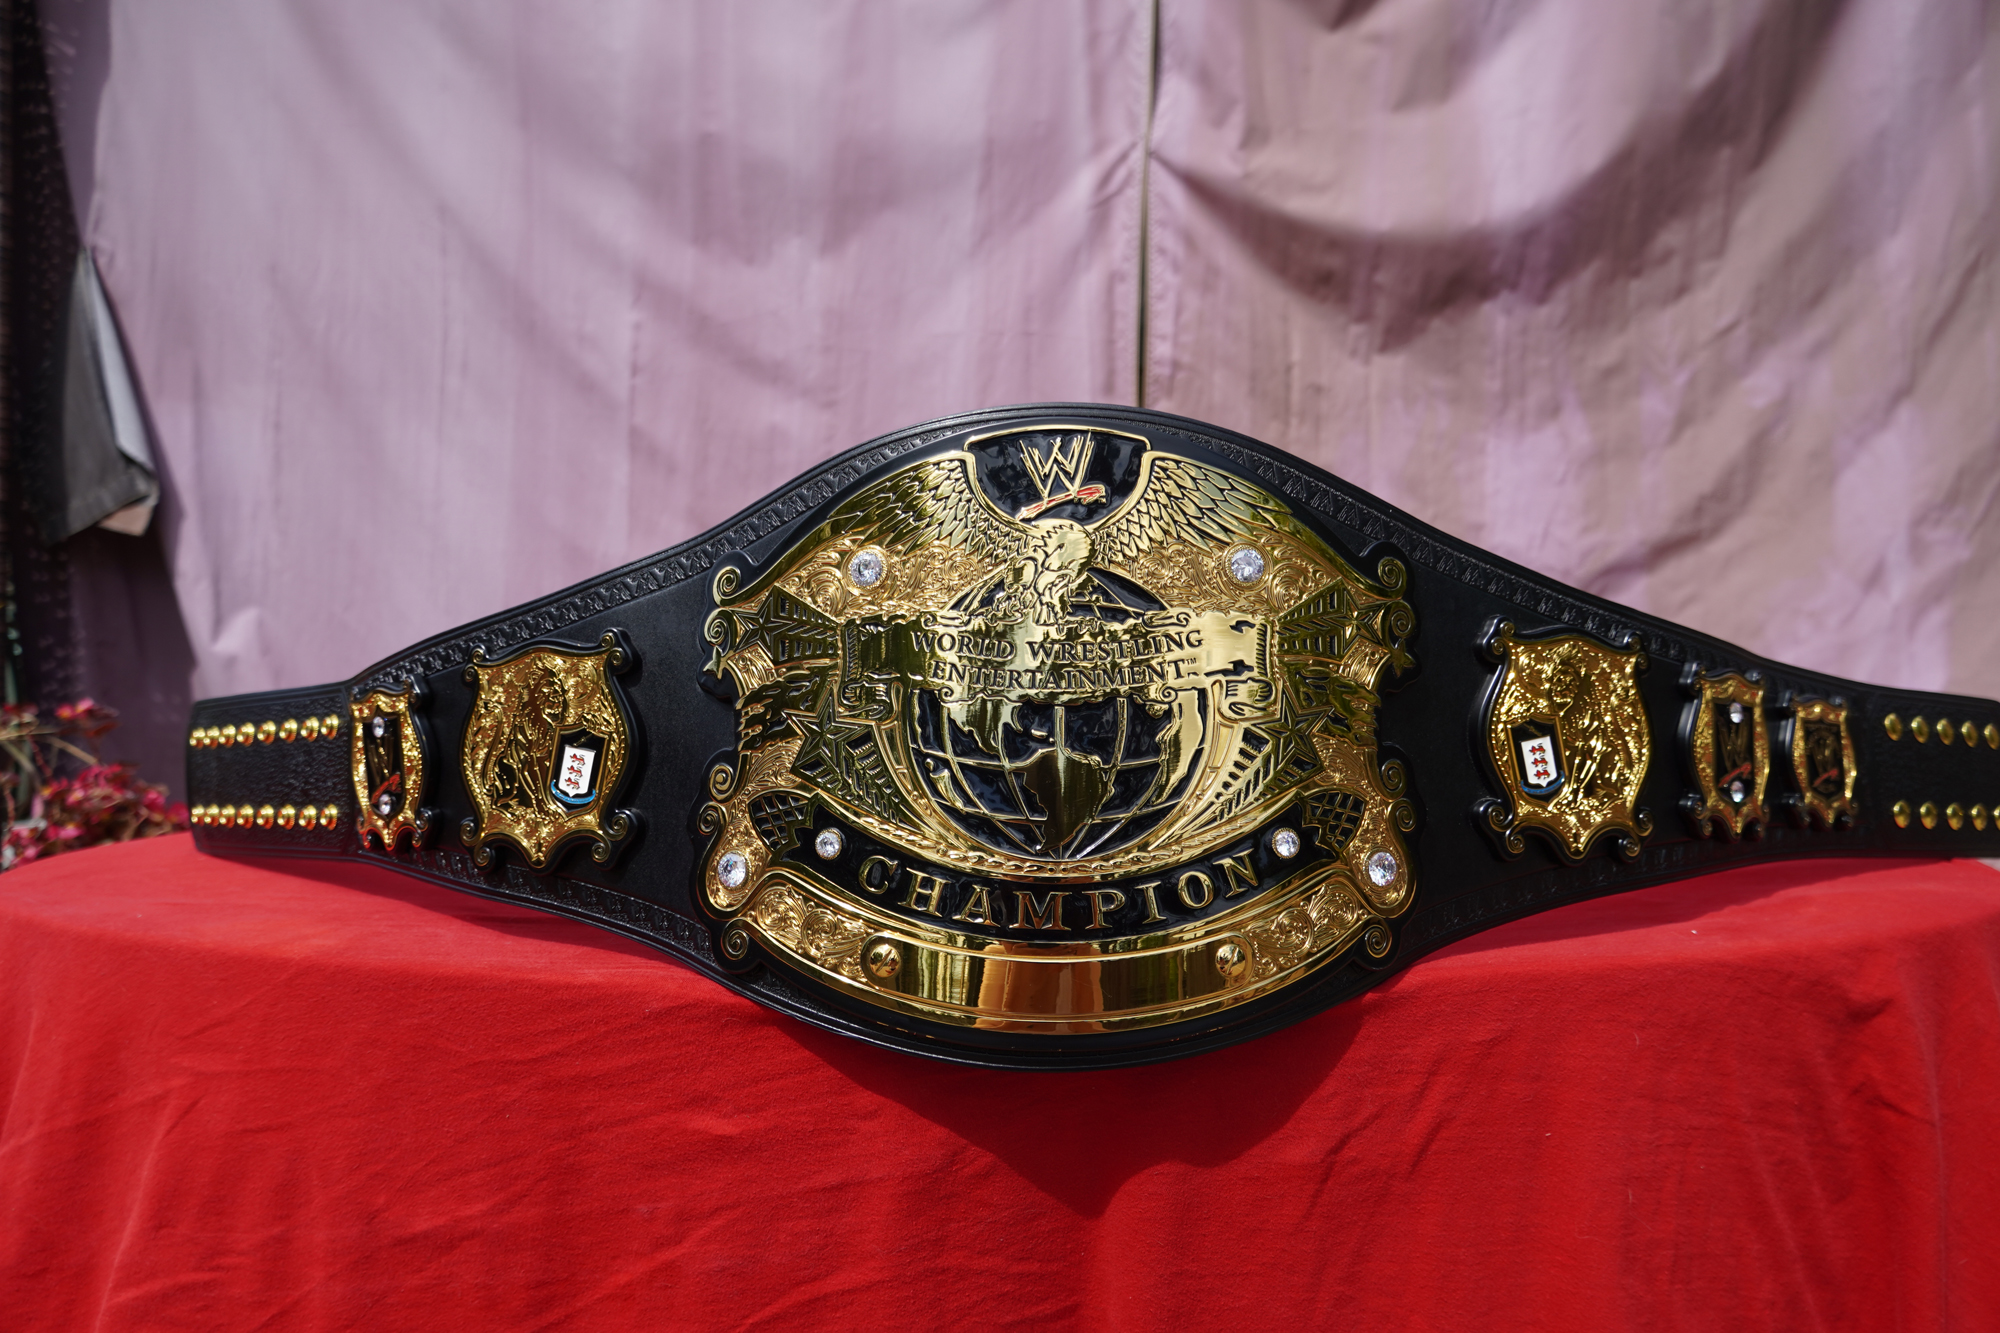 world wrestling entertainment championship belt